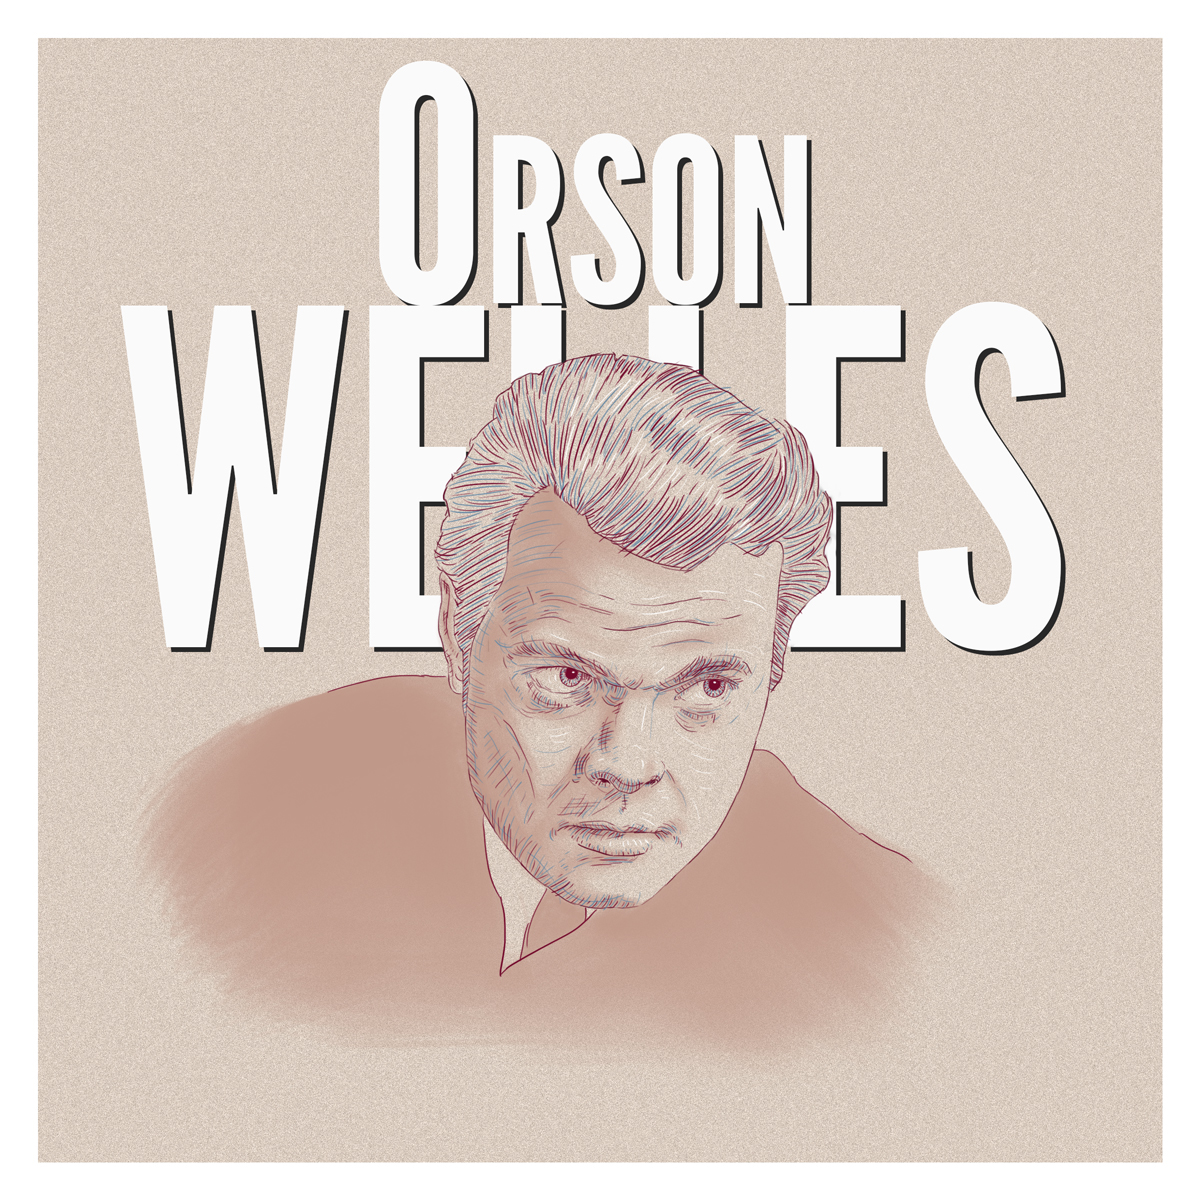 grant orson Orson Welles welles gregory peck peck james stewart stewart Cary Grant